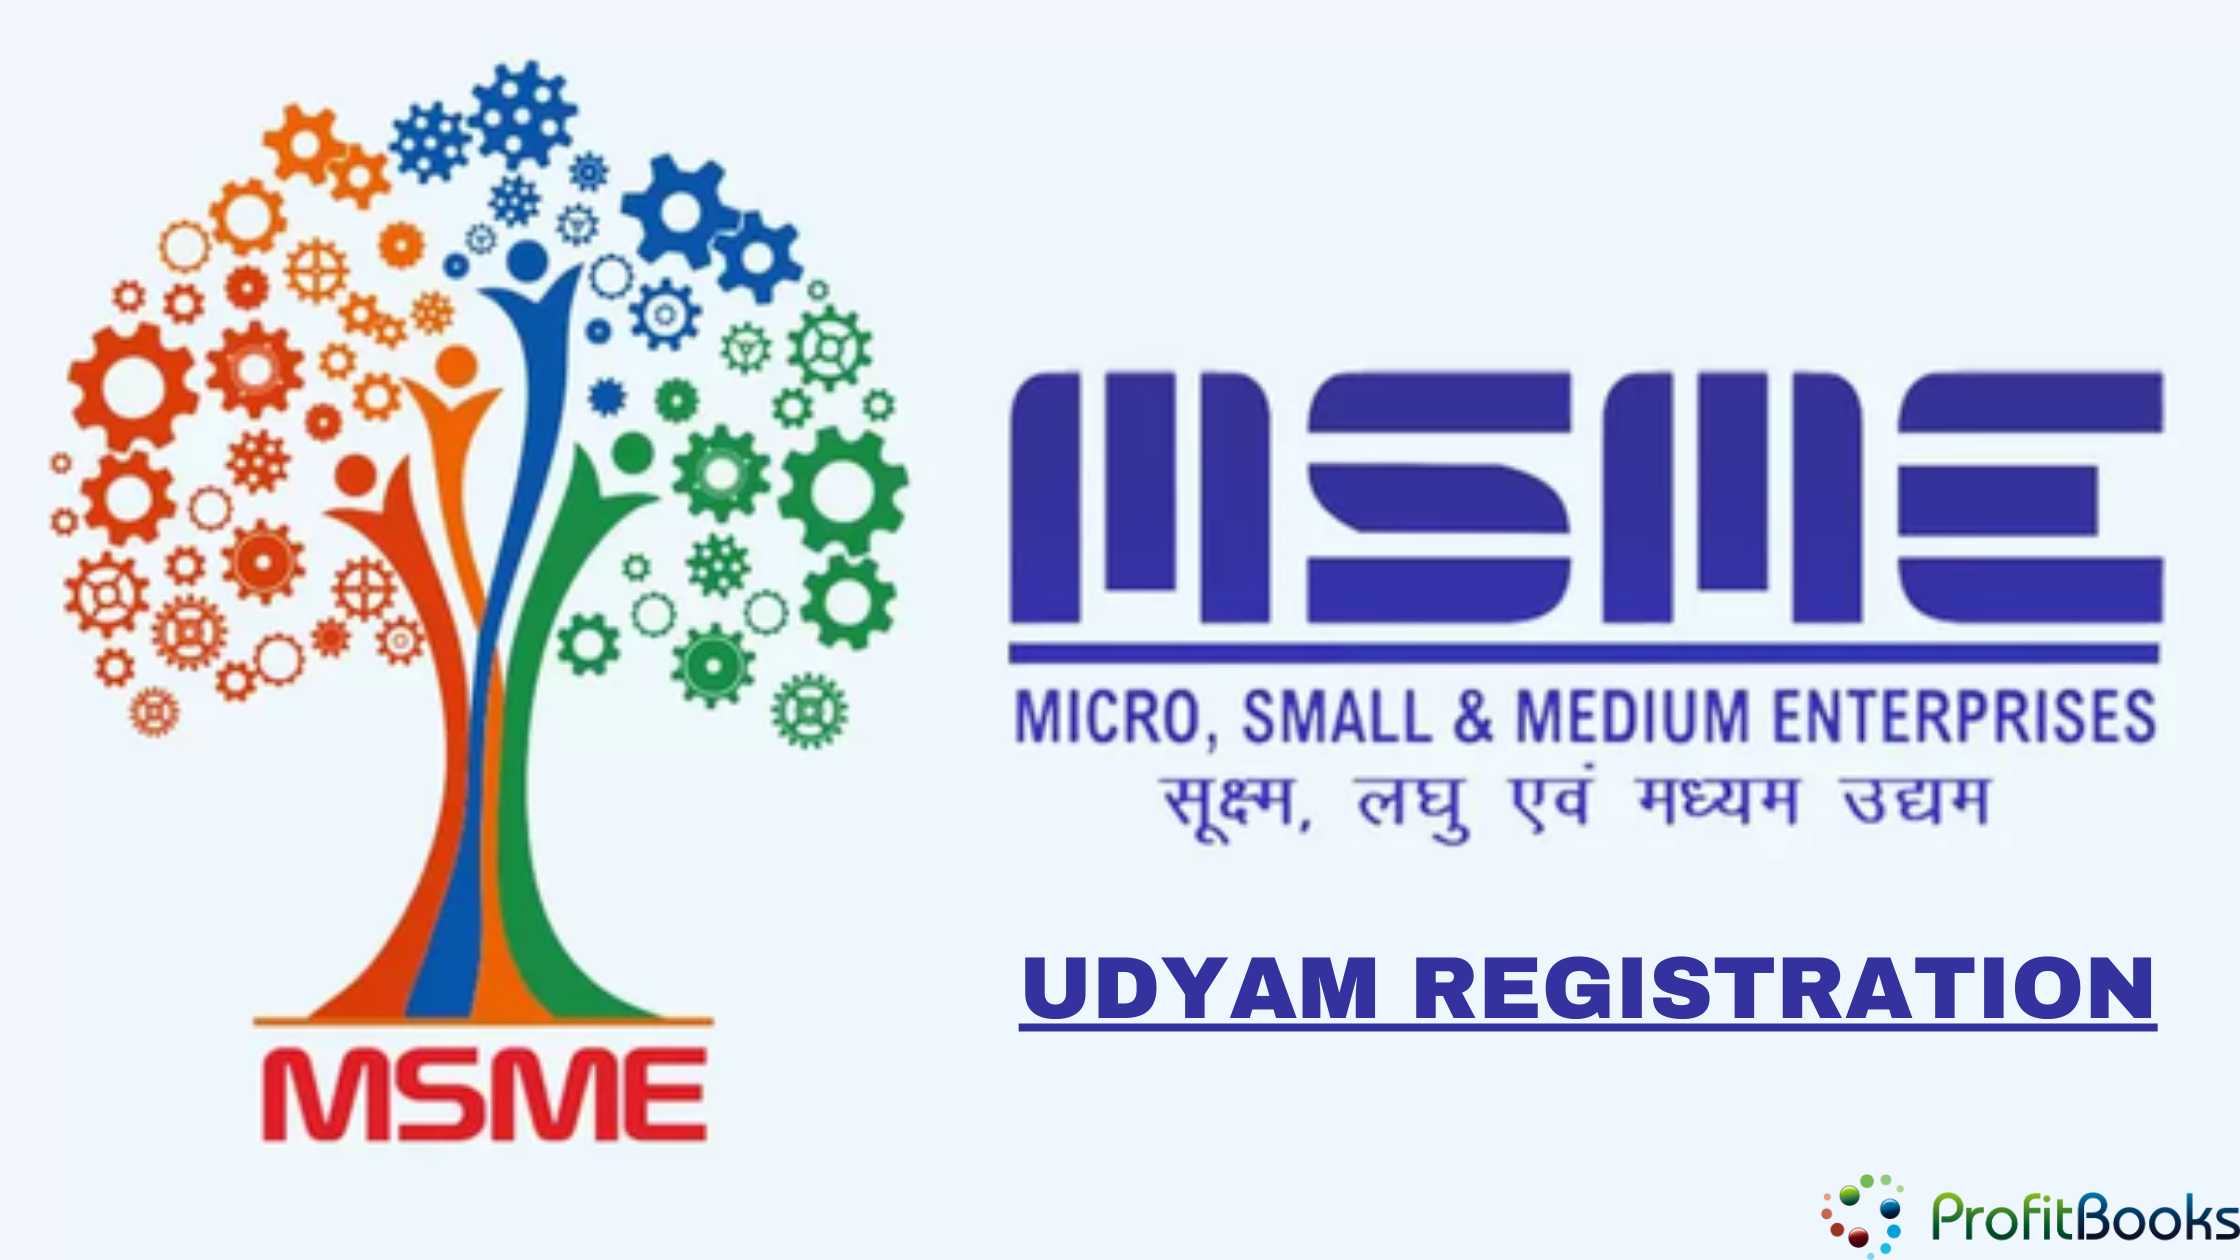 Udyam Registration For MSMEs